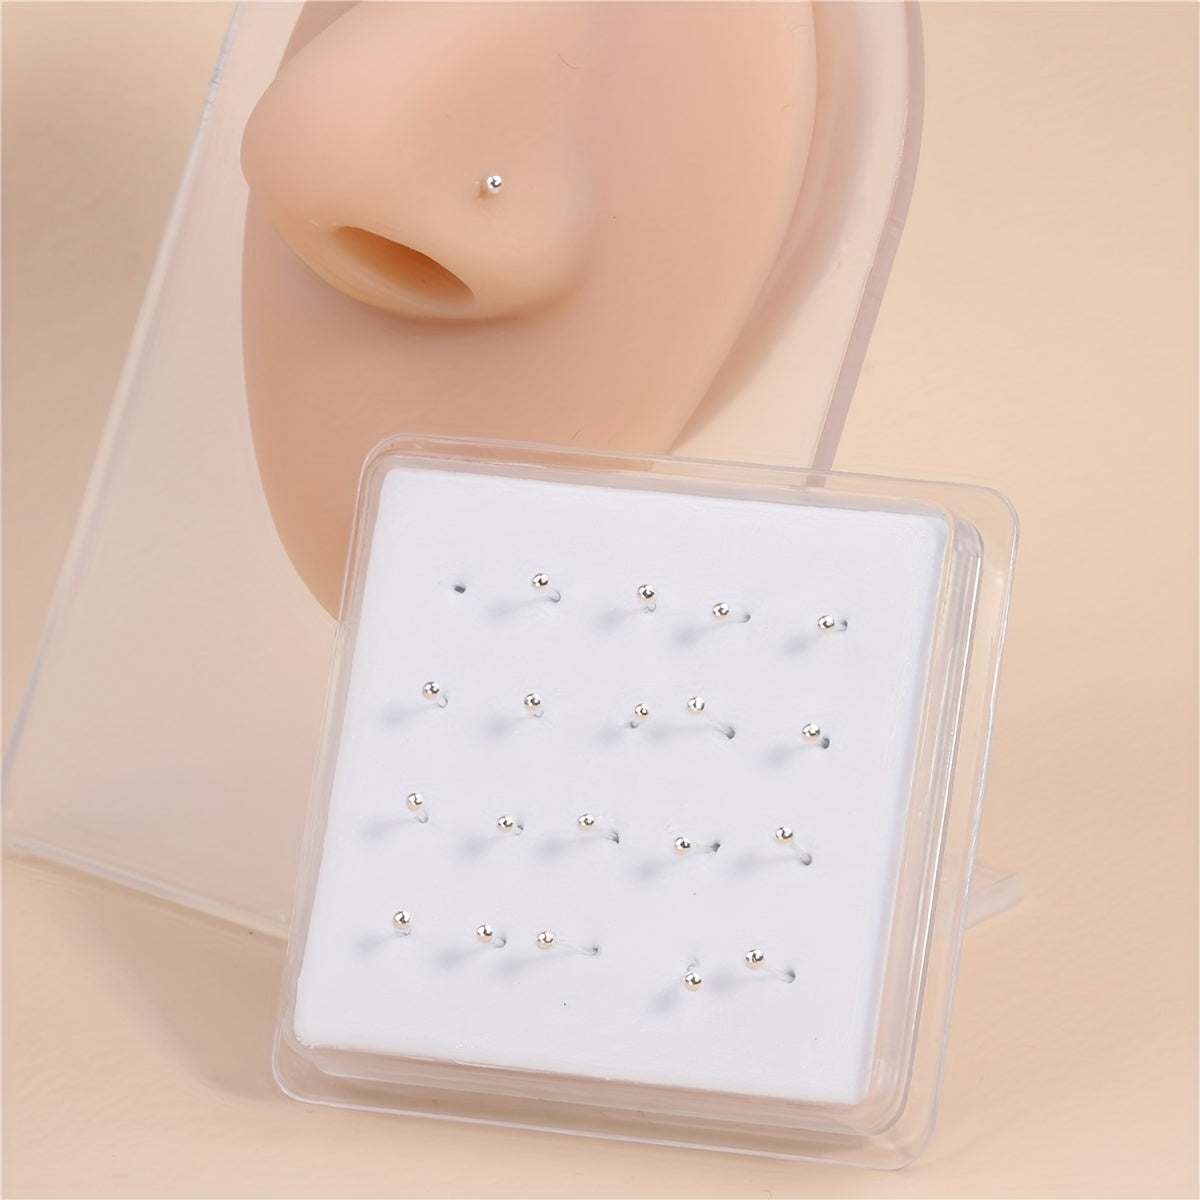 20pcs Golden Nose Ring Set For Women Men Straight Needle Body Piercing Jewelry